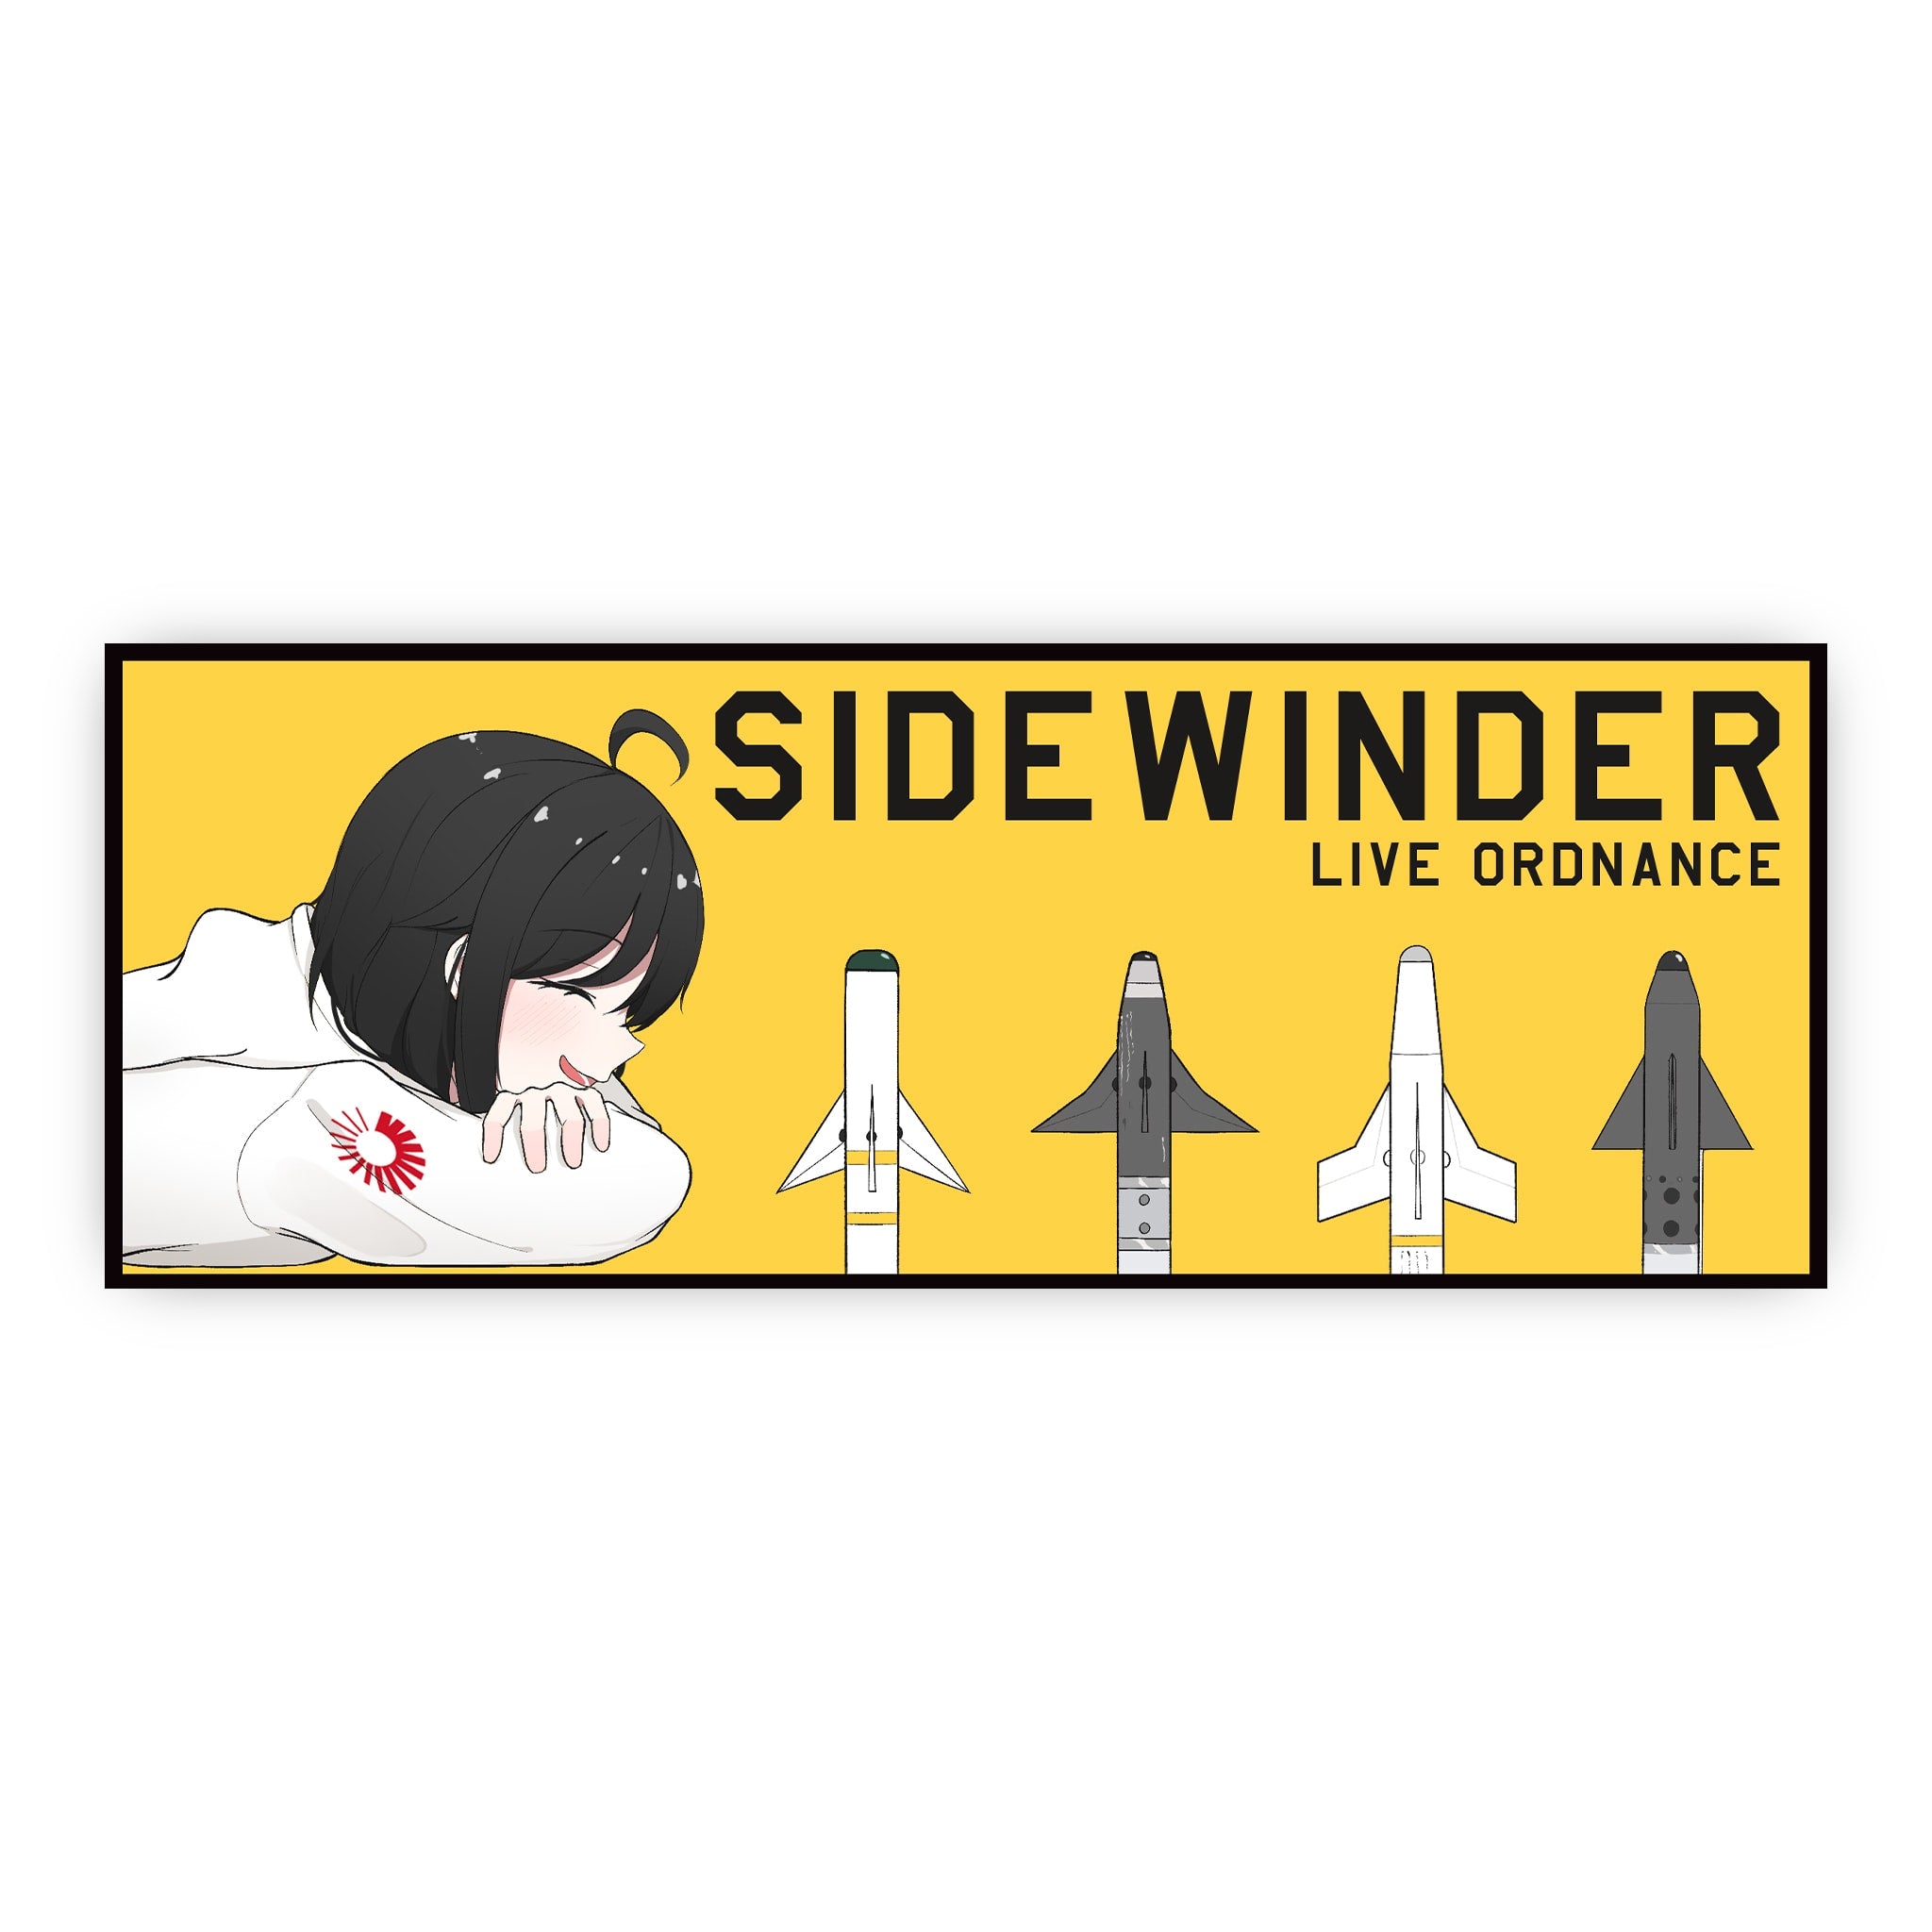 sidewinder missile logo